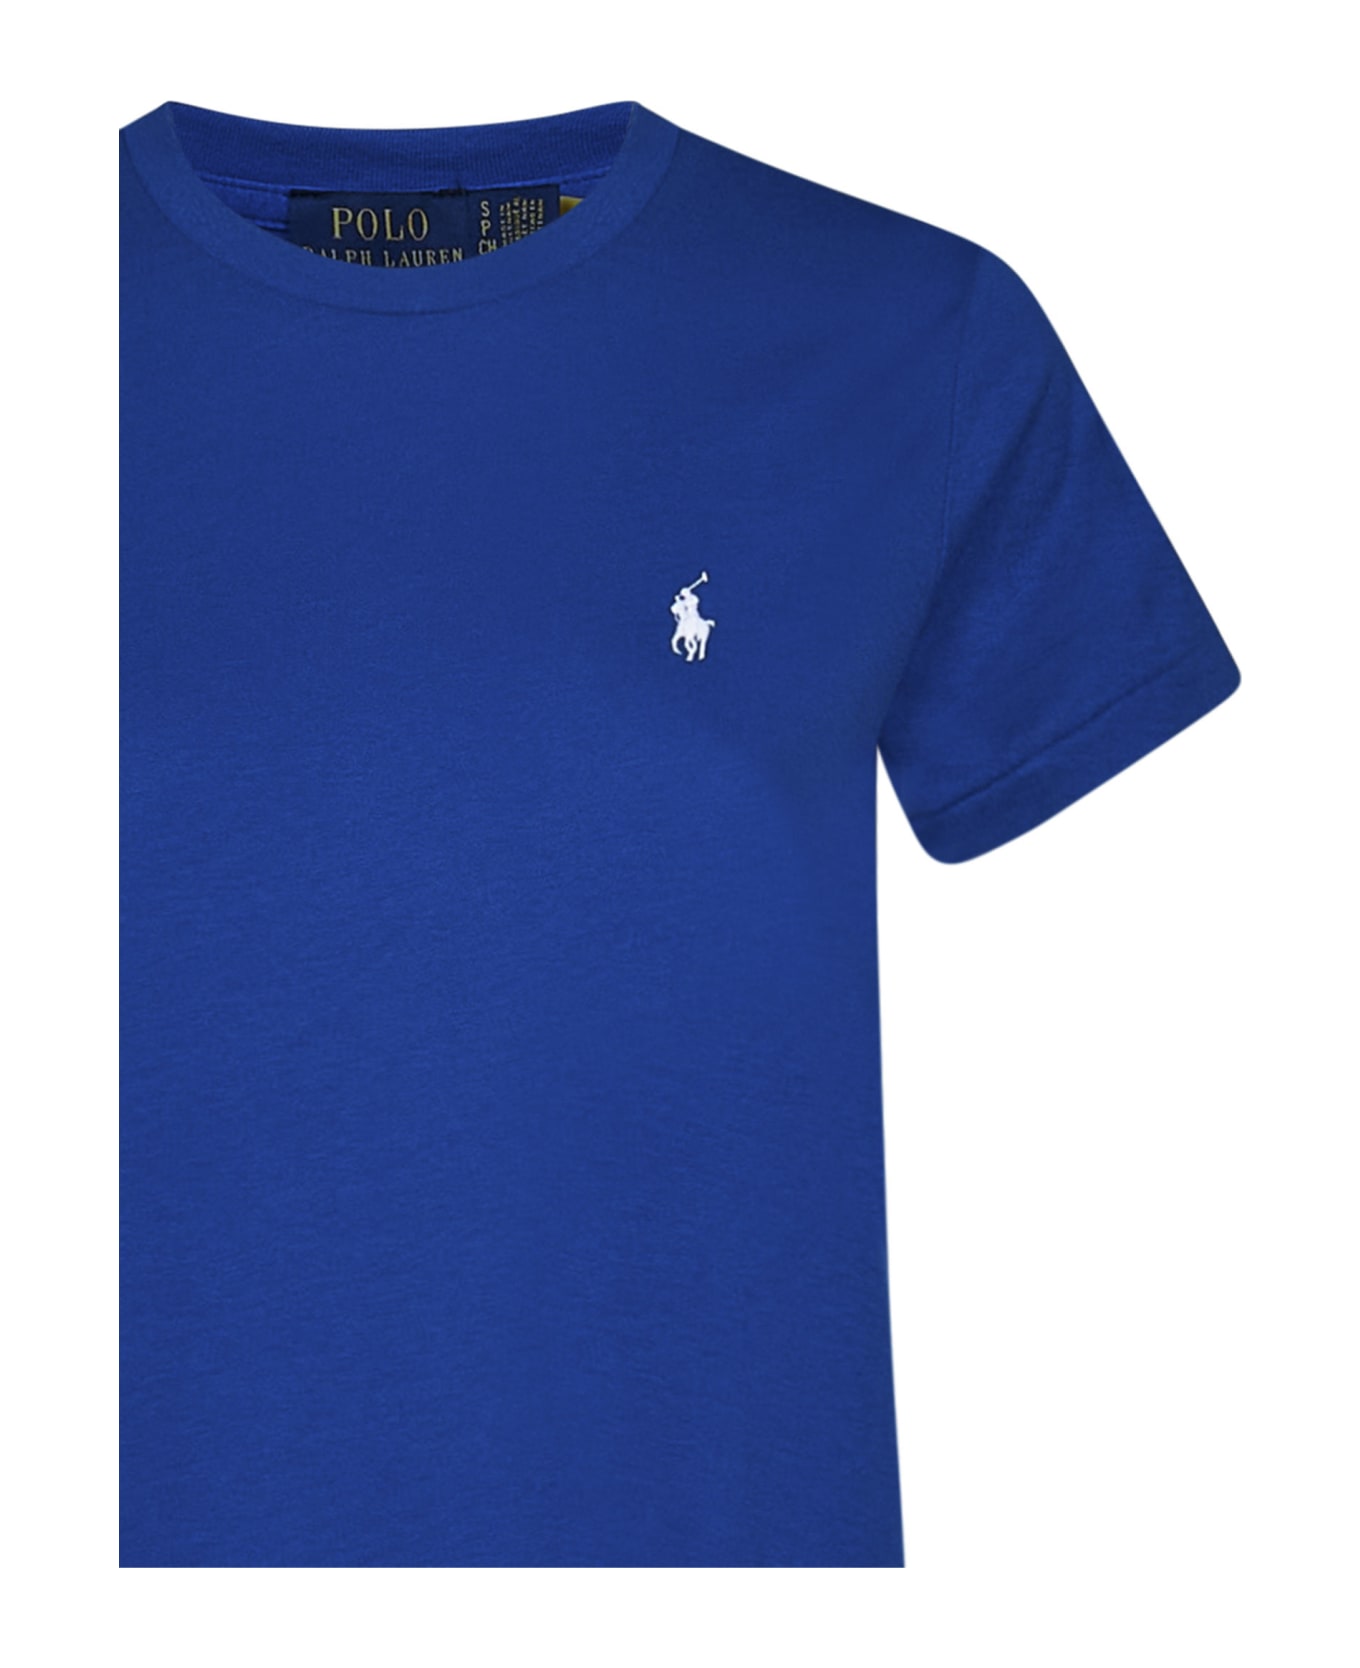 Polo Ralph Lauren Pony T-shirt - Blue Tシャツ